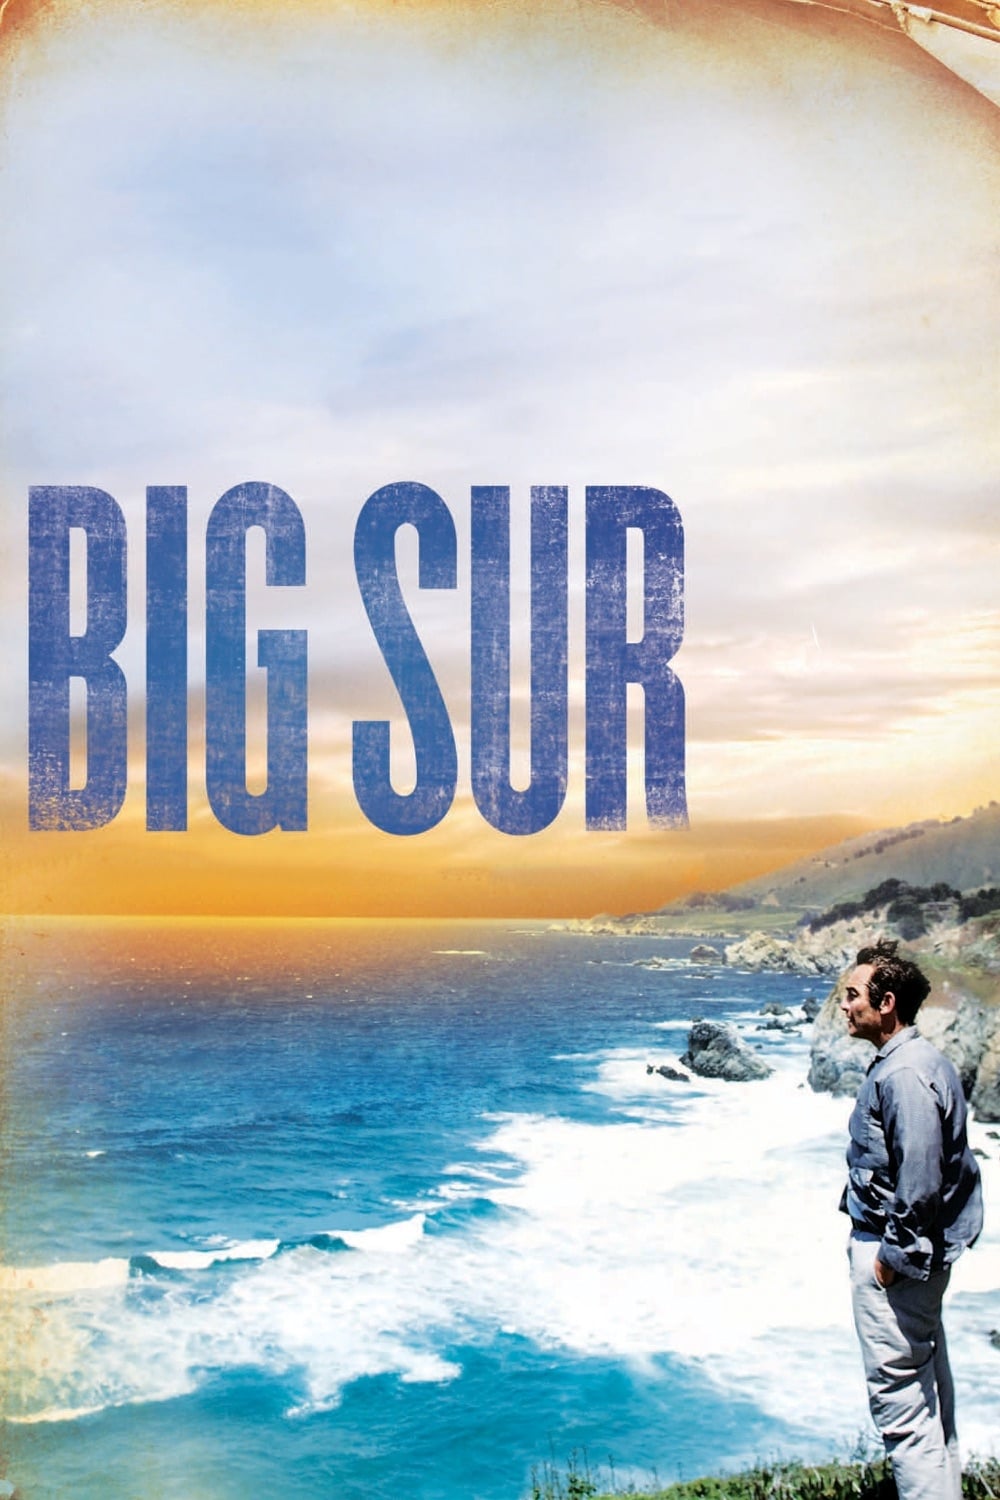 Big Sur film